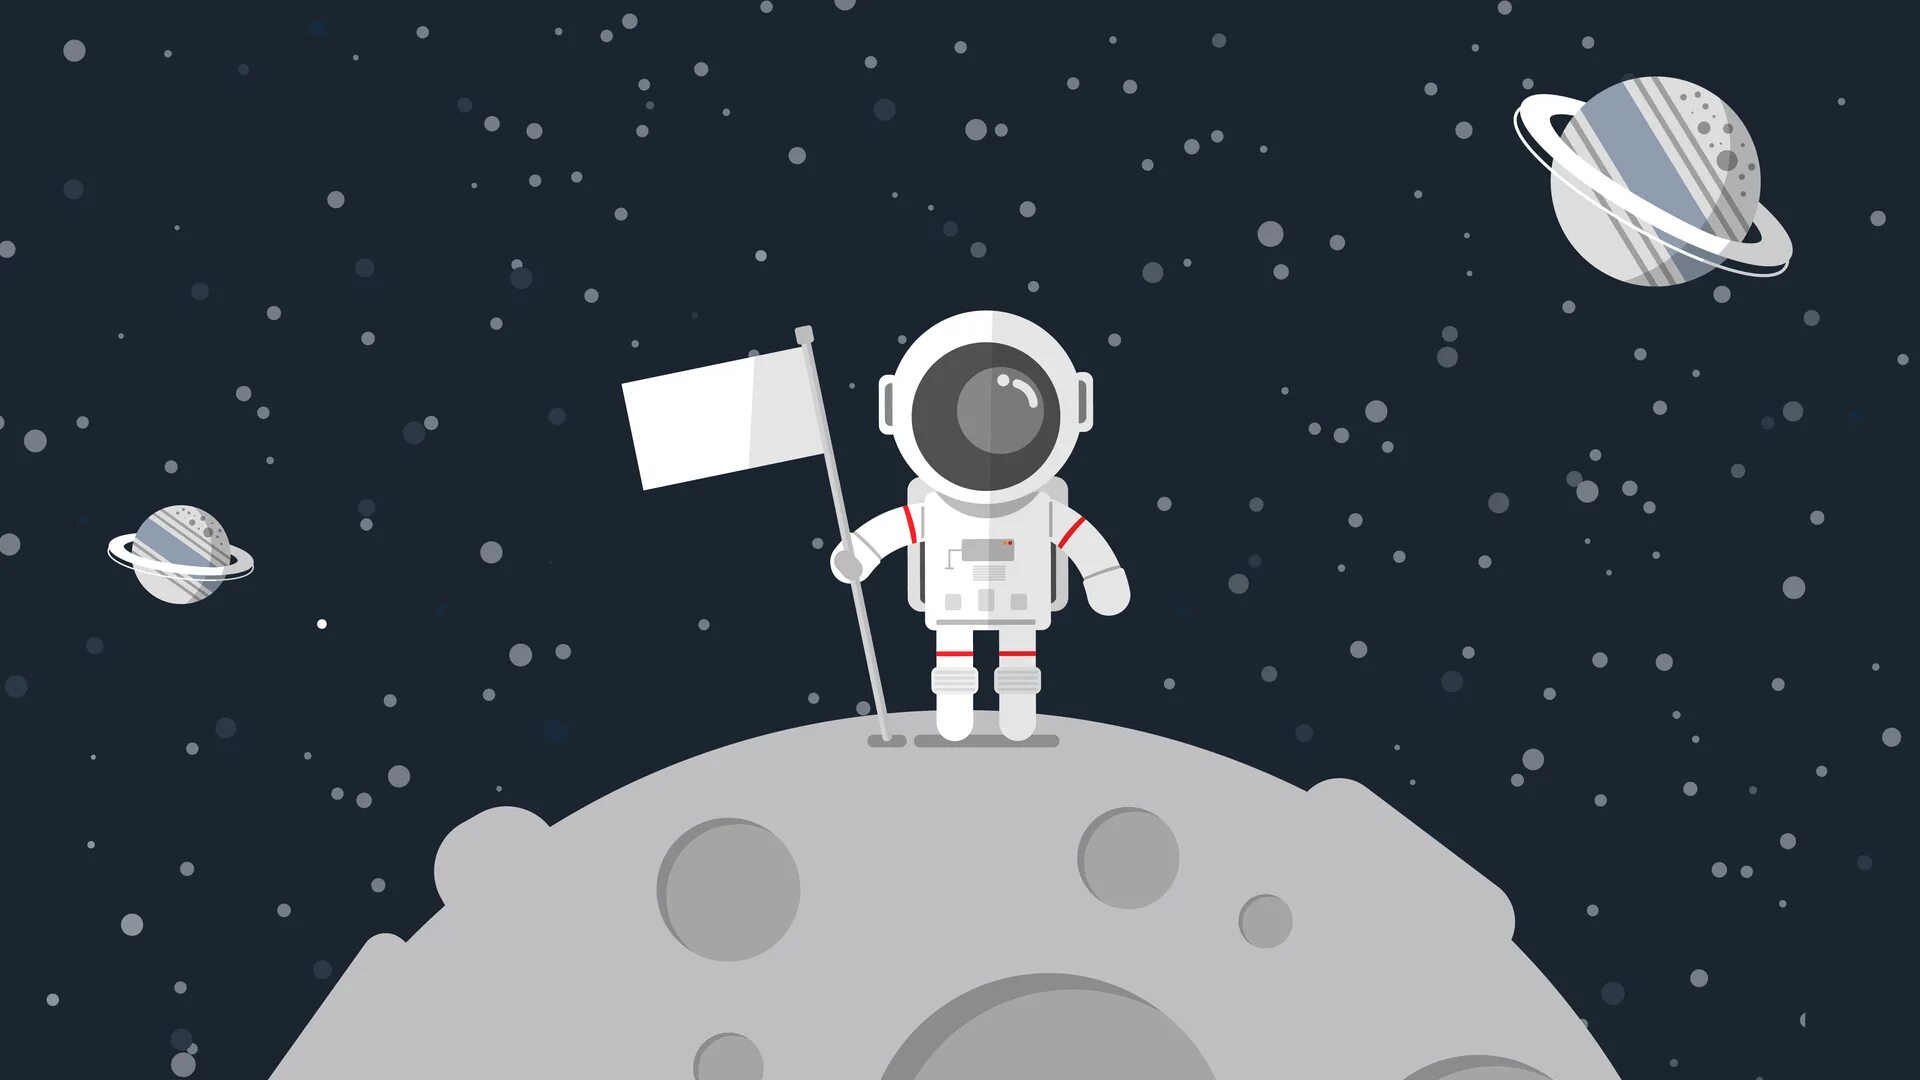 Удачи господин горский. Космонавт на Луне. Космонавт на Луне рисунок. Космонавт с флагом. Астронавт на Луне вектор.